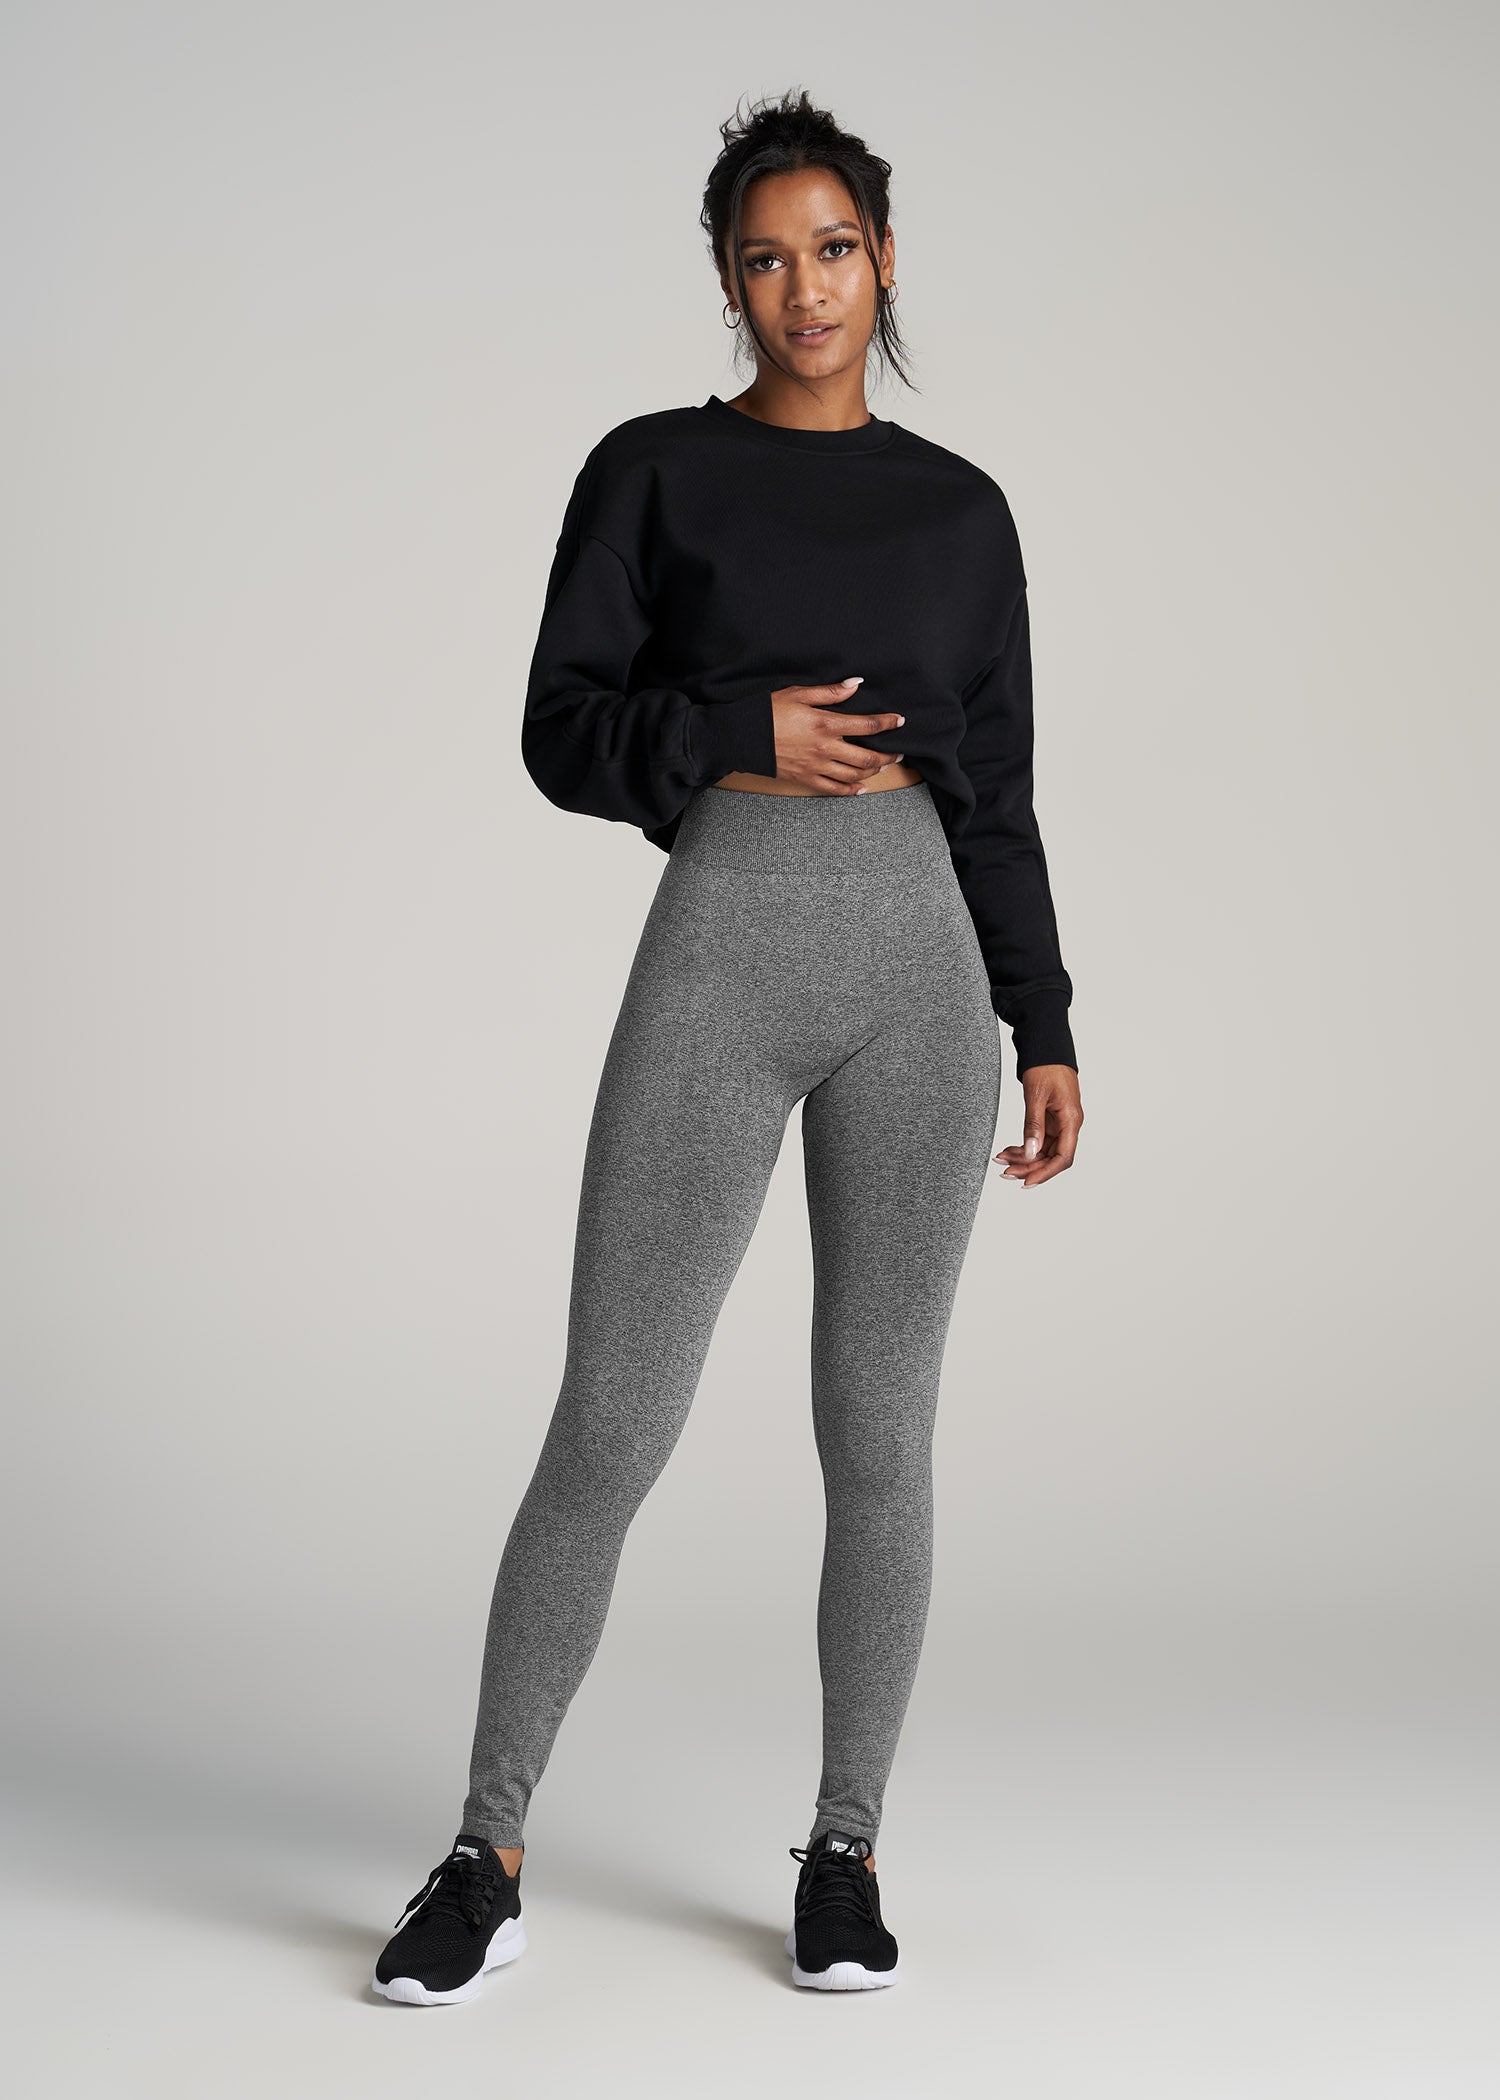 Seamless Leggings for Tall Women in Black & Grey Heather